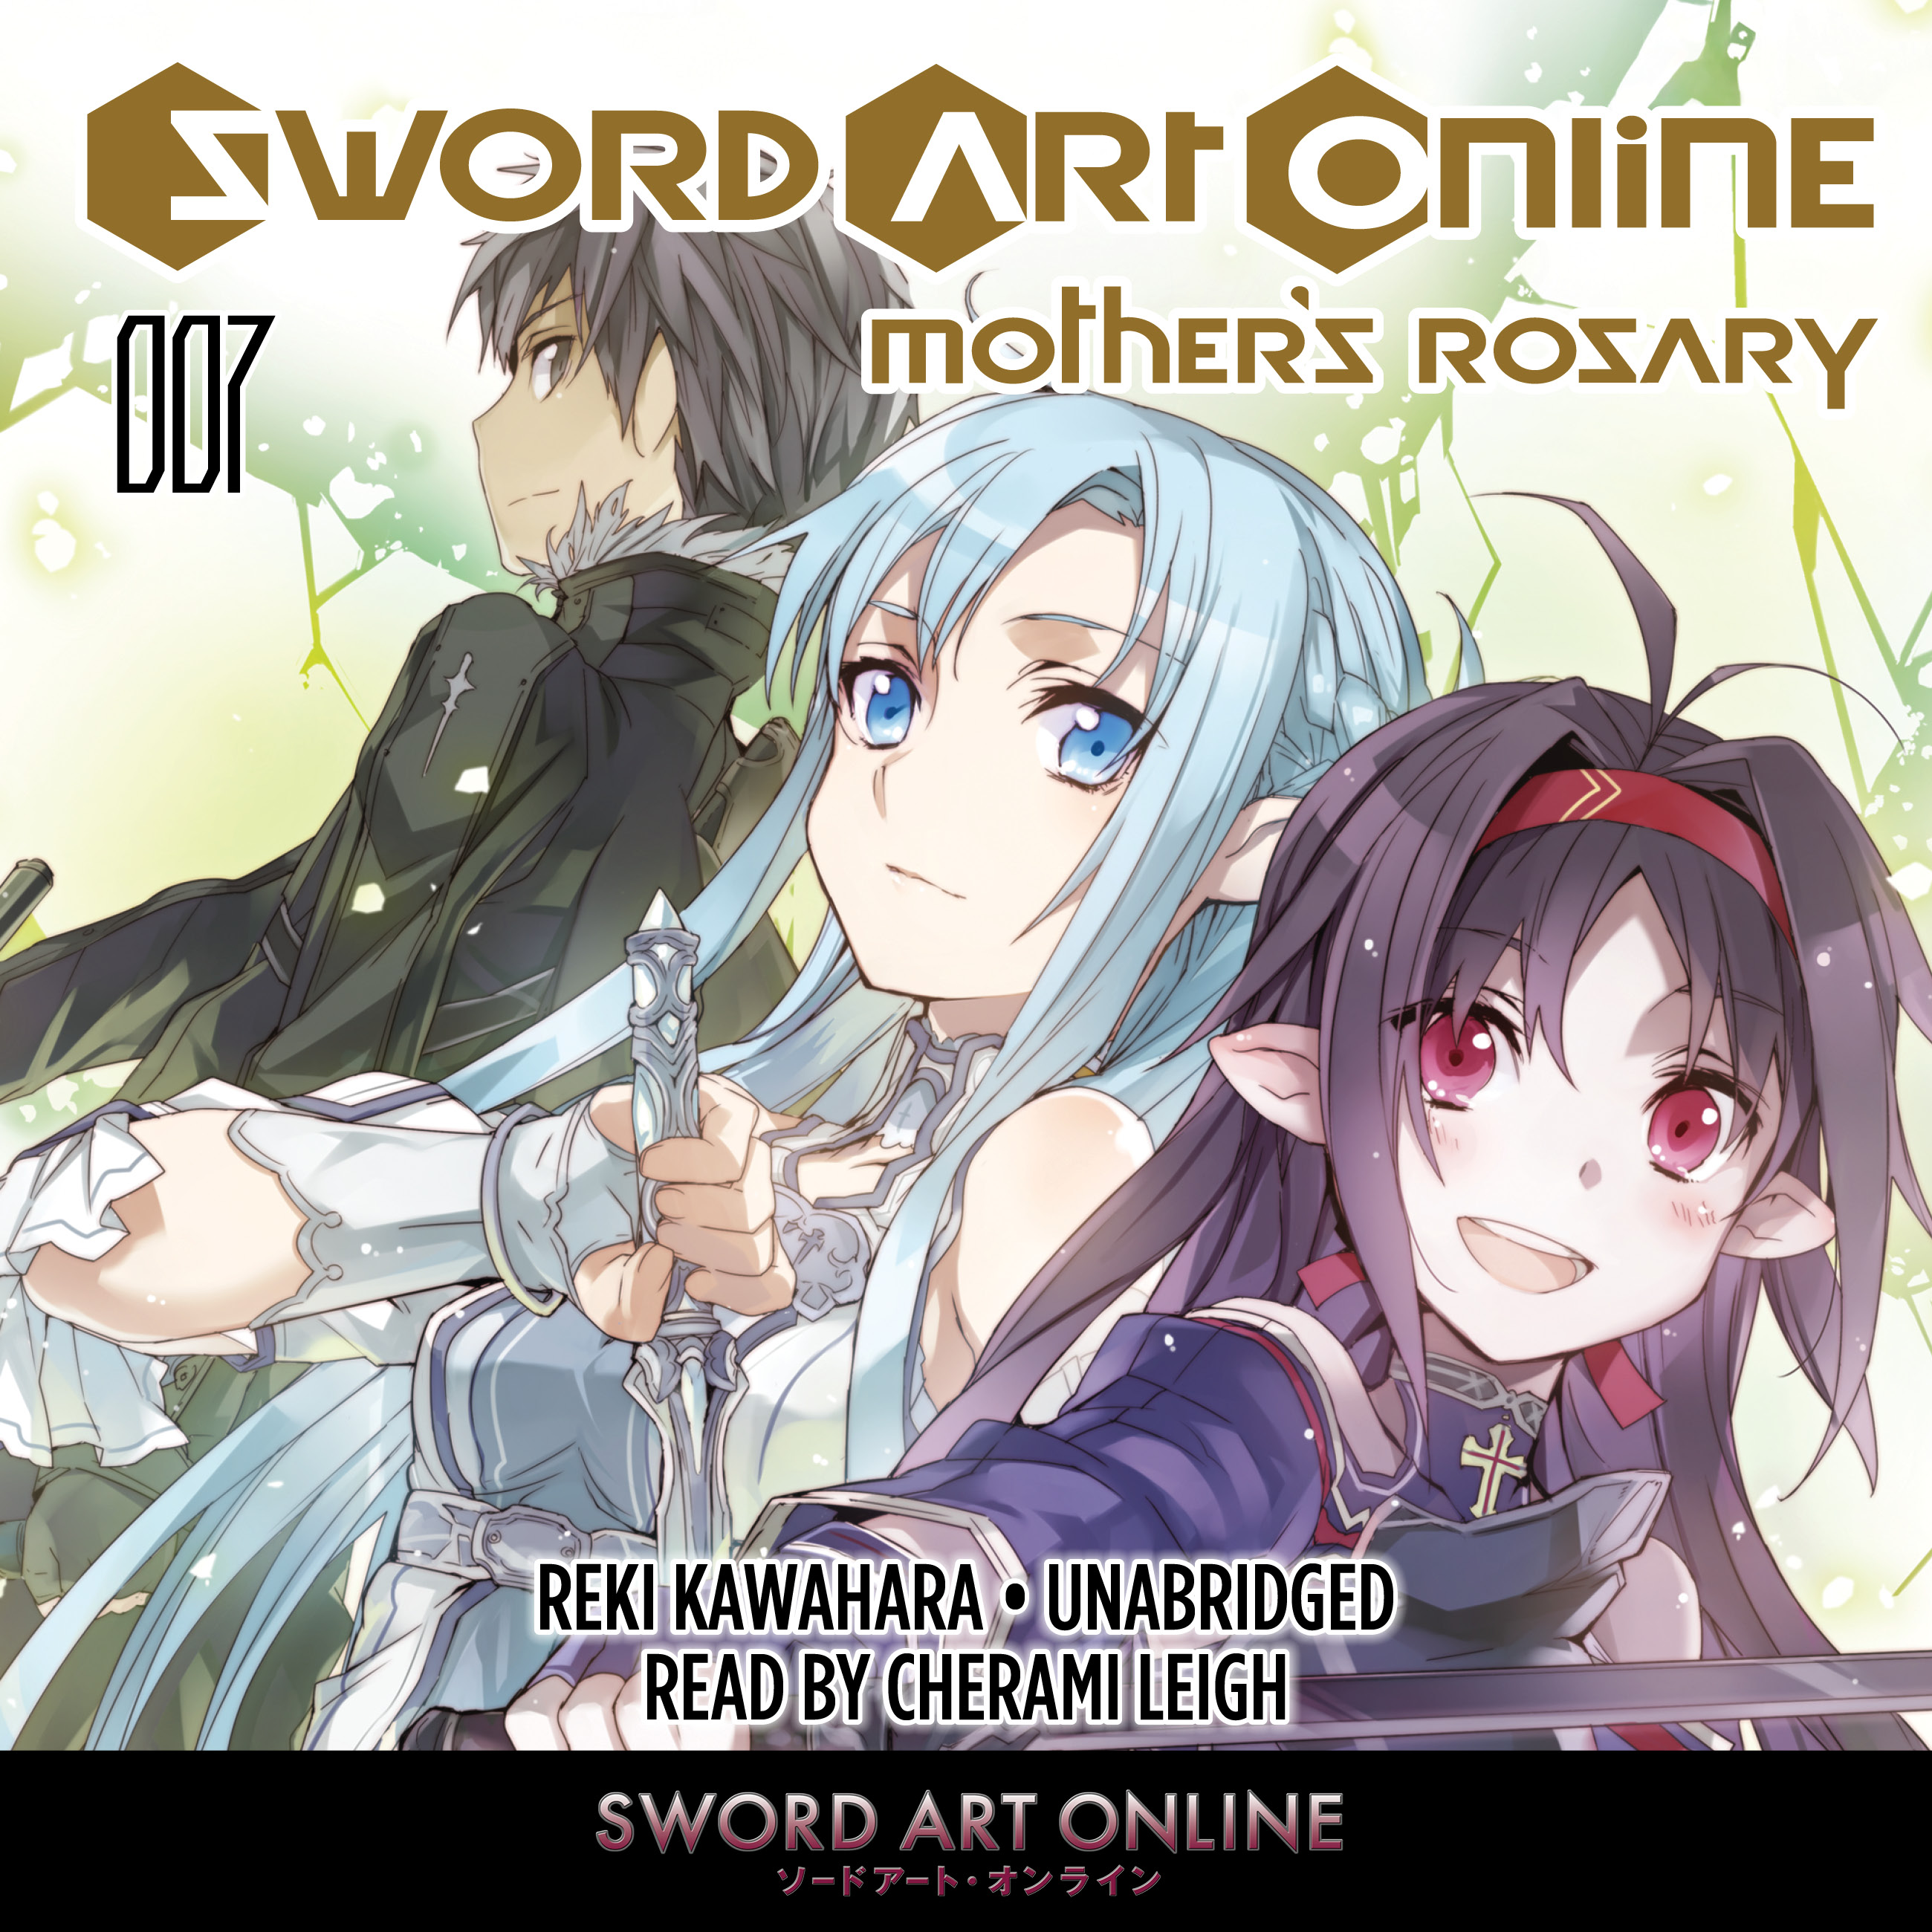 Sword Art Online Series, News